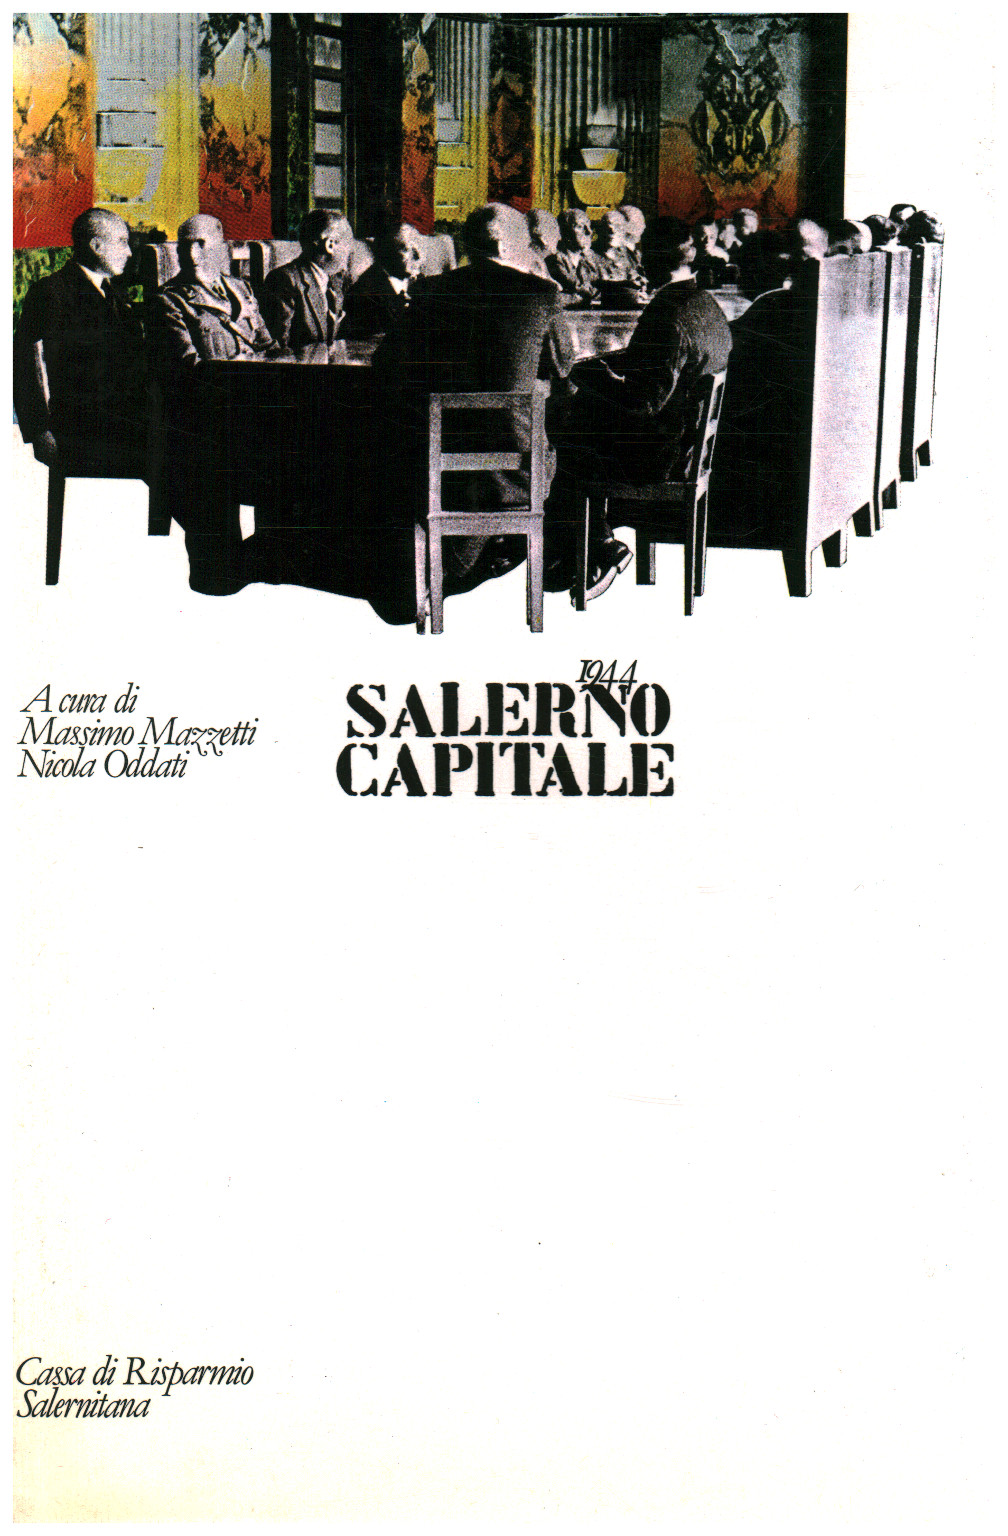 1944 Salerno capitale, s.a.